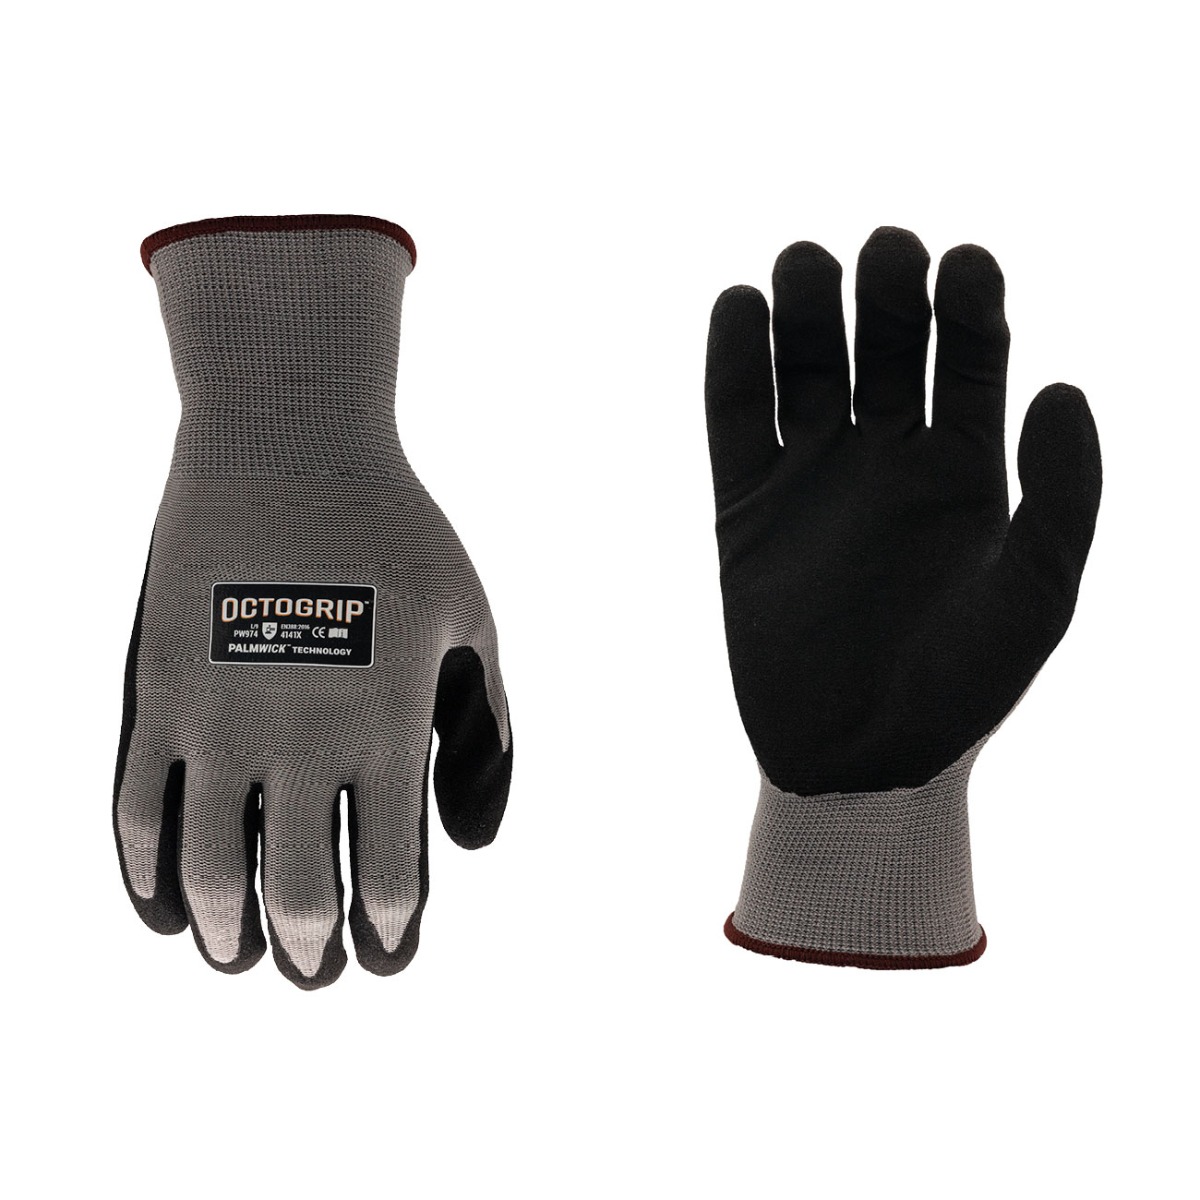 High Performance Manual Handling Glove 13g - Size L